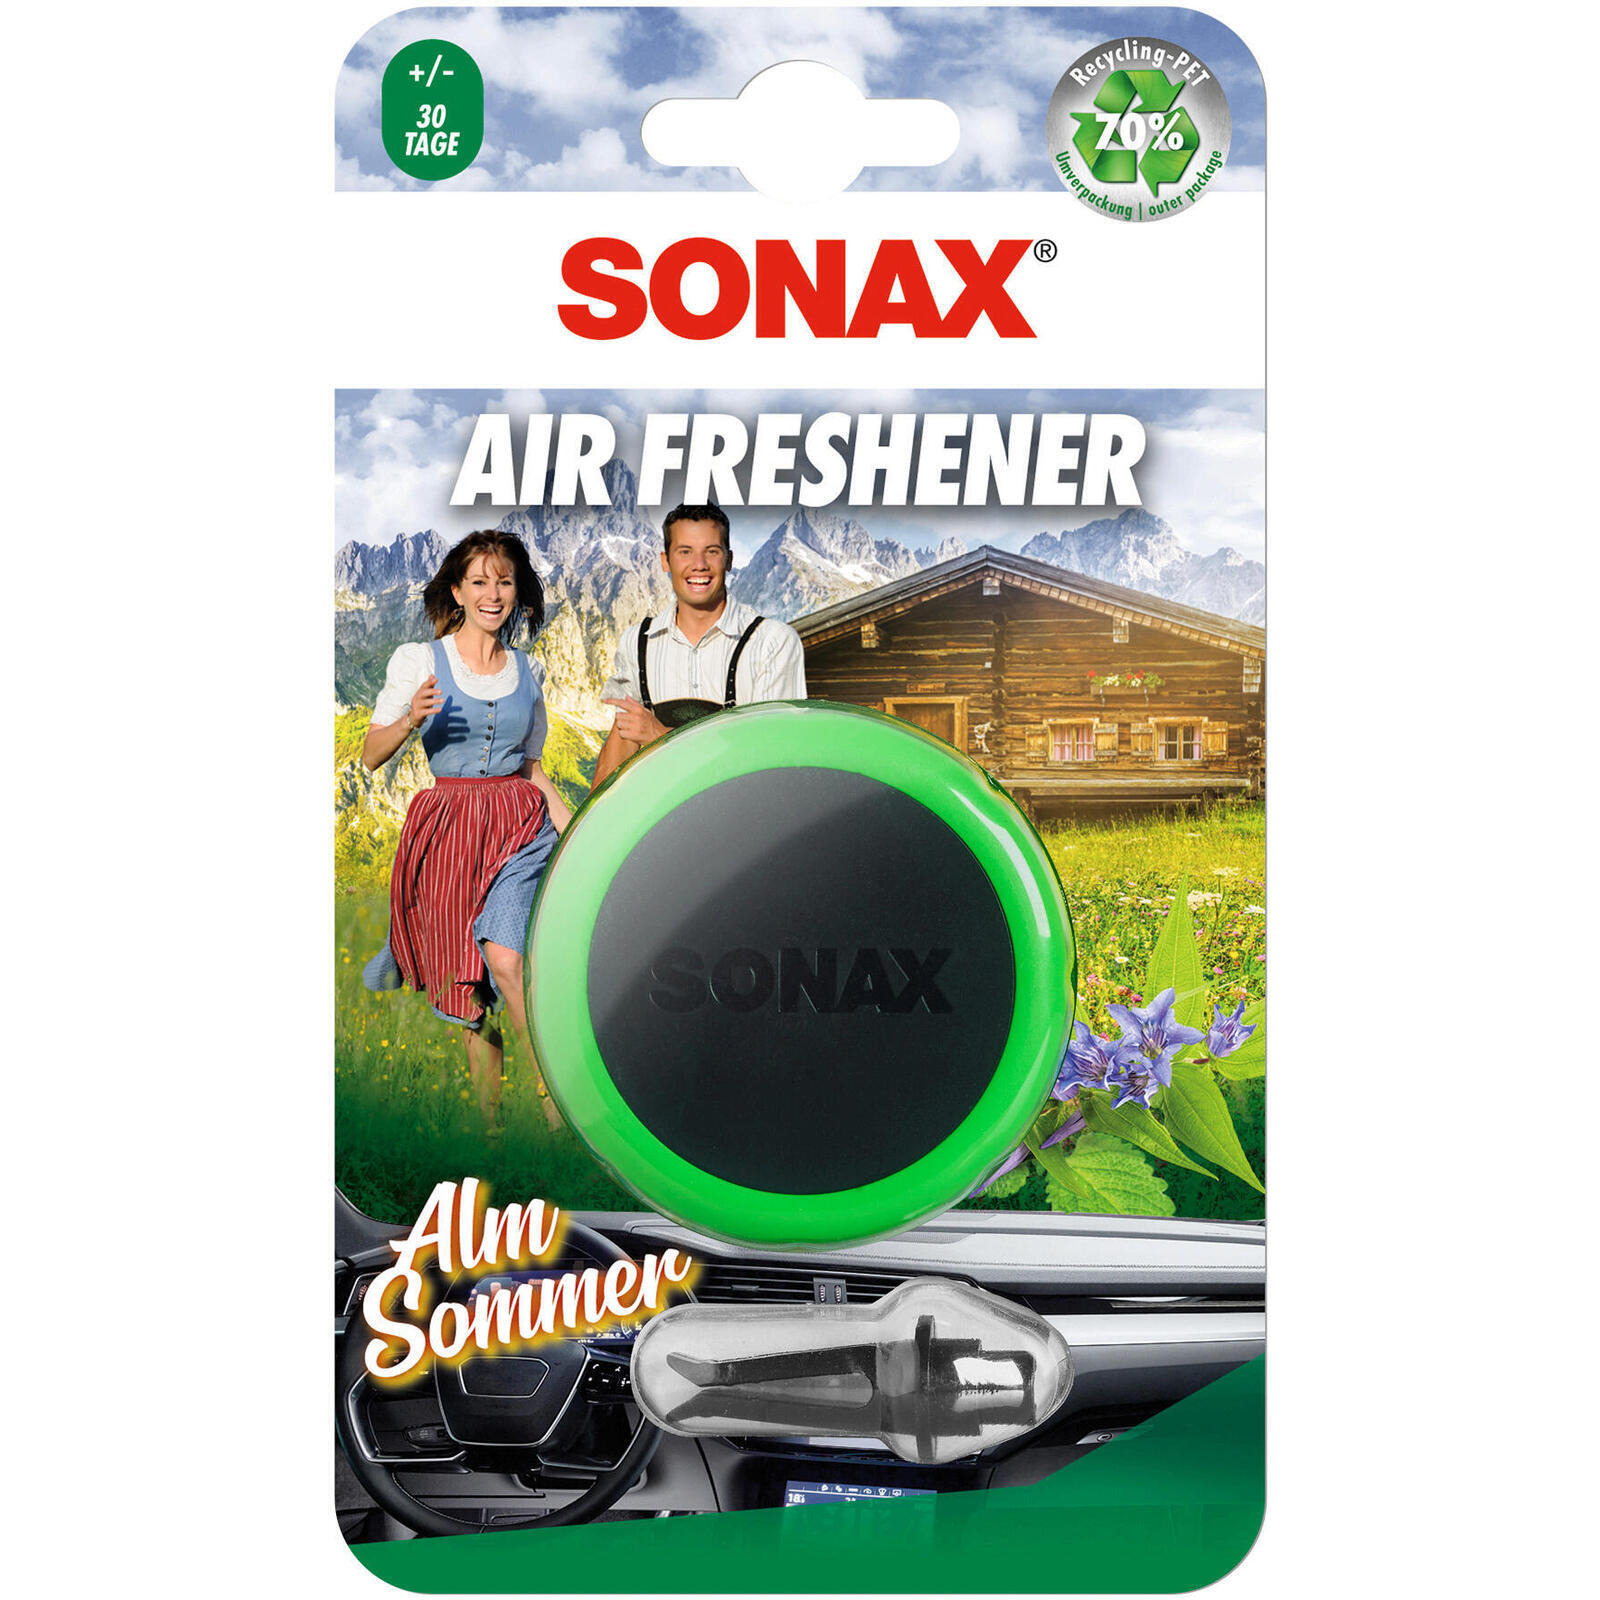 SONAX Air Freshener Air Freshener AlmSommer